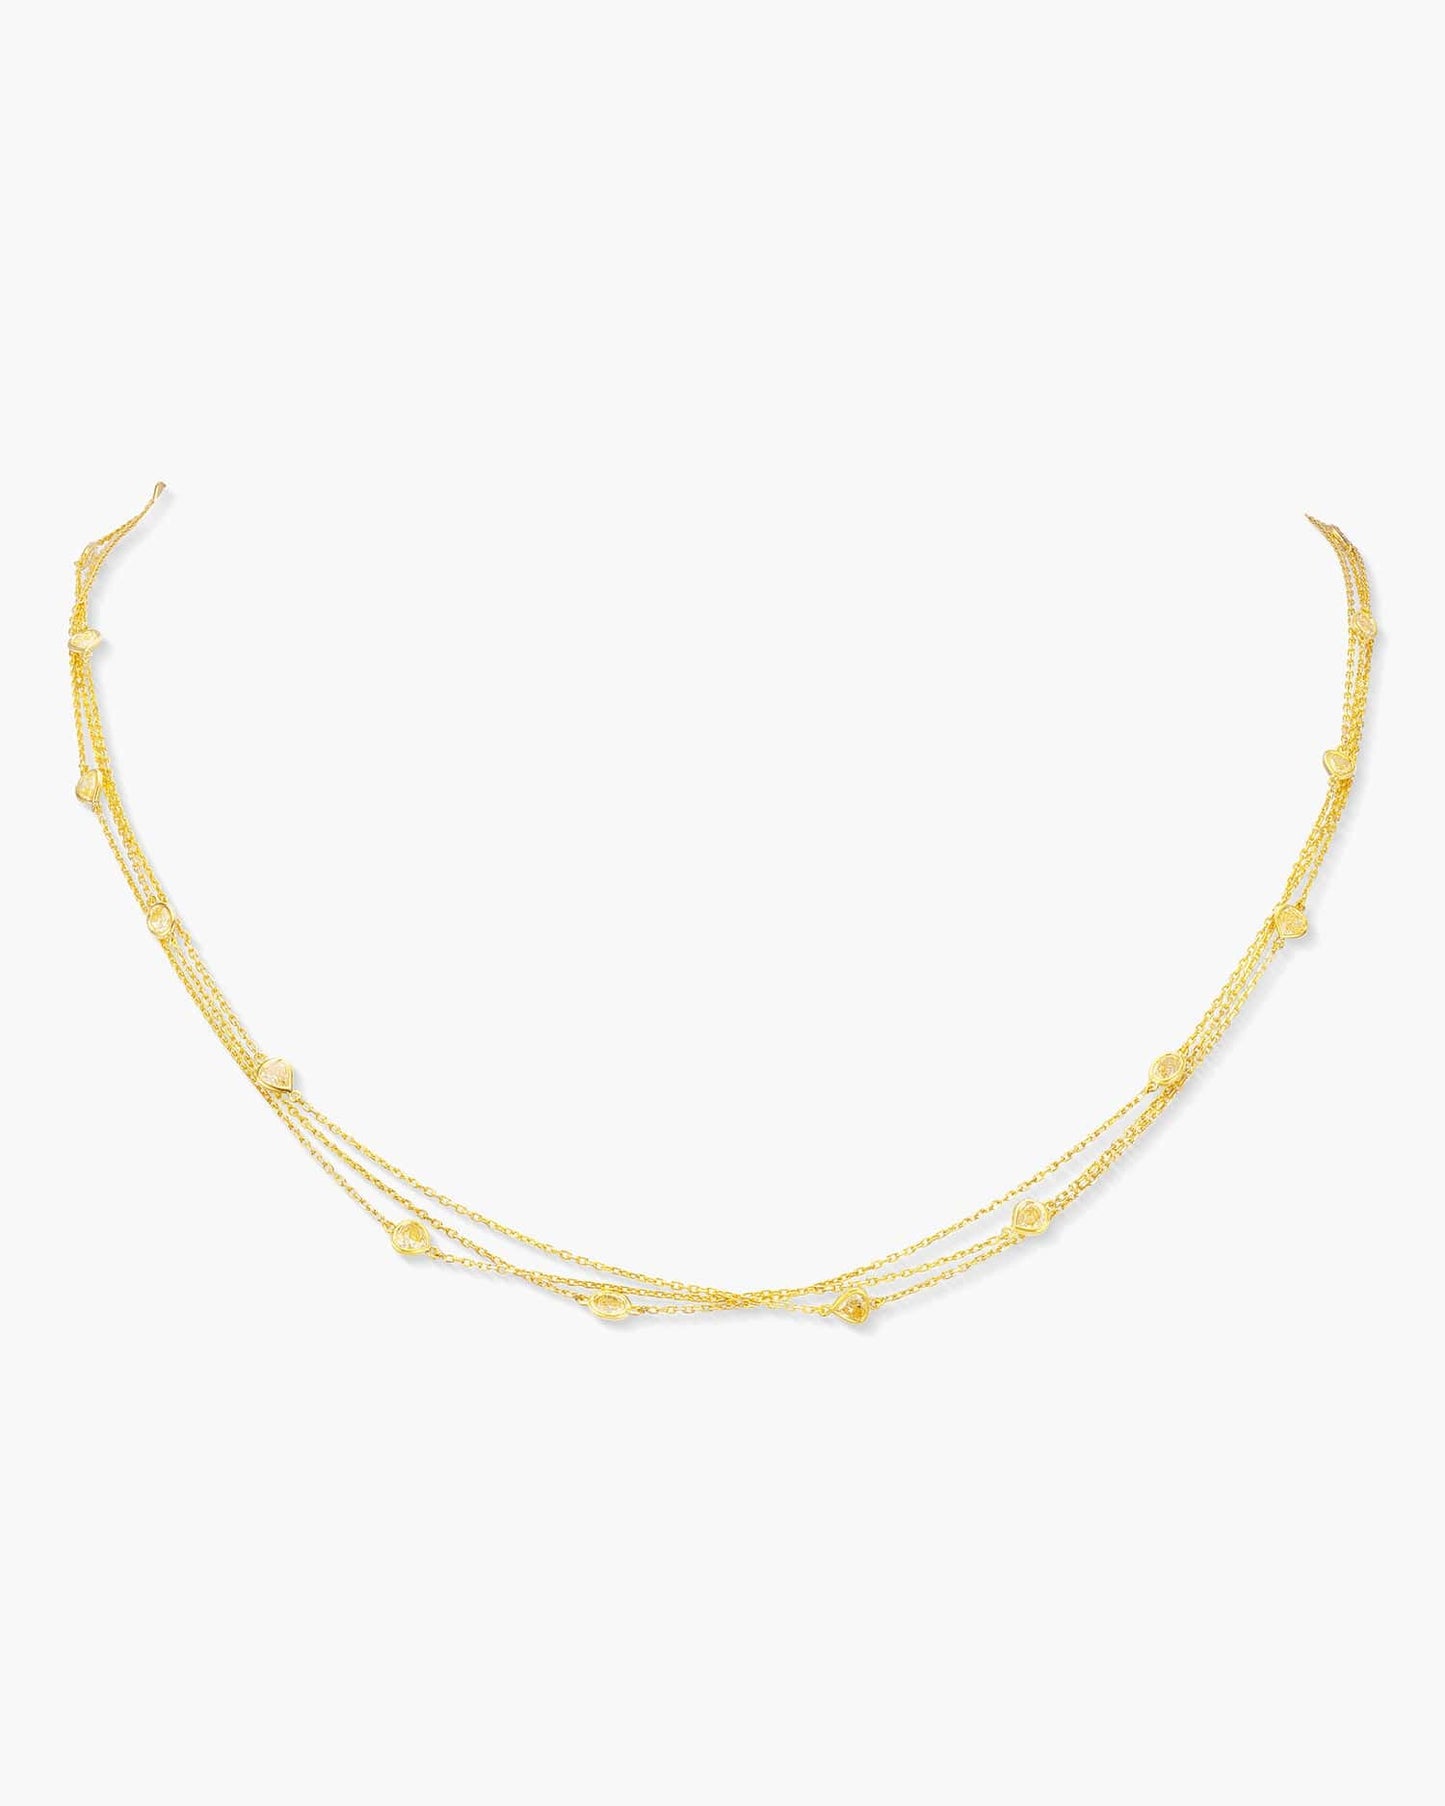 Fancy Shaped Yellow Diamond Necklace, 3.05 carats